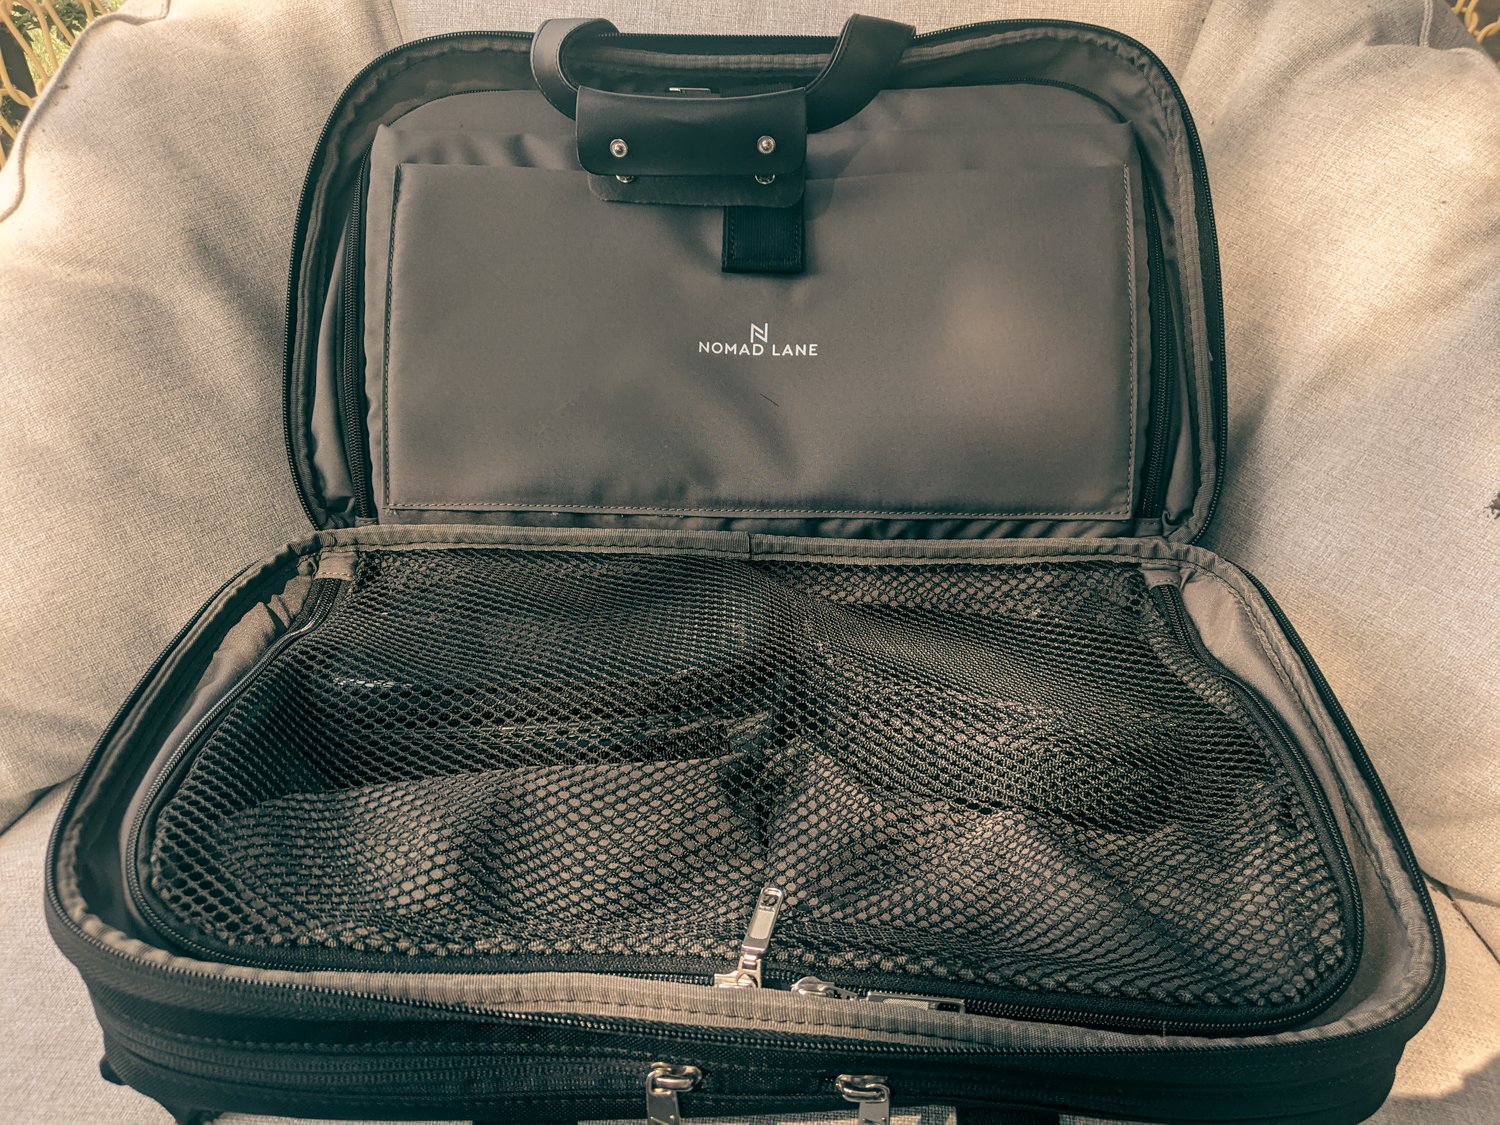 Bento Bag: Most Thoughtful Travel Bag Ever